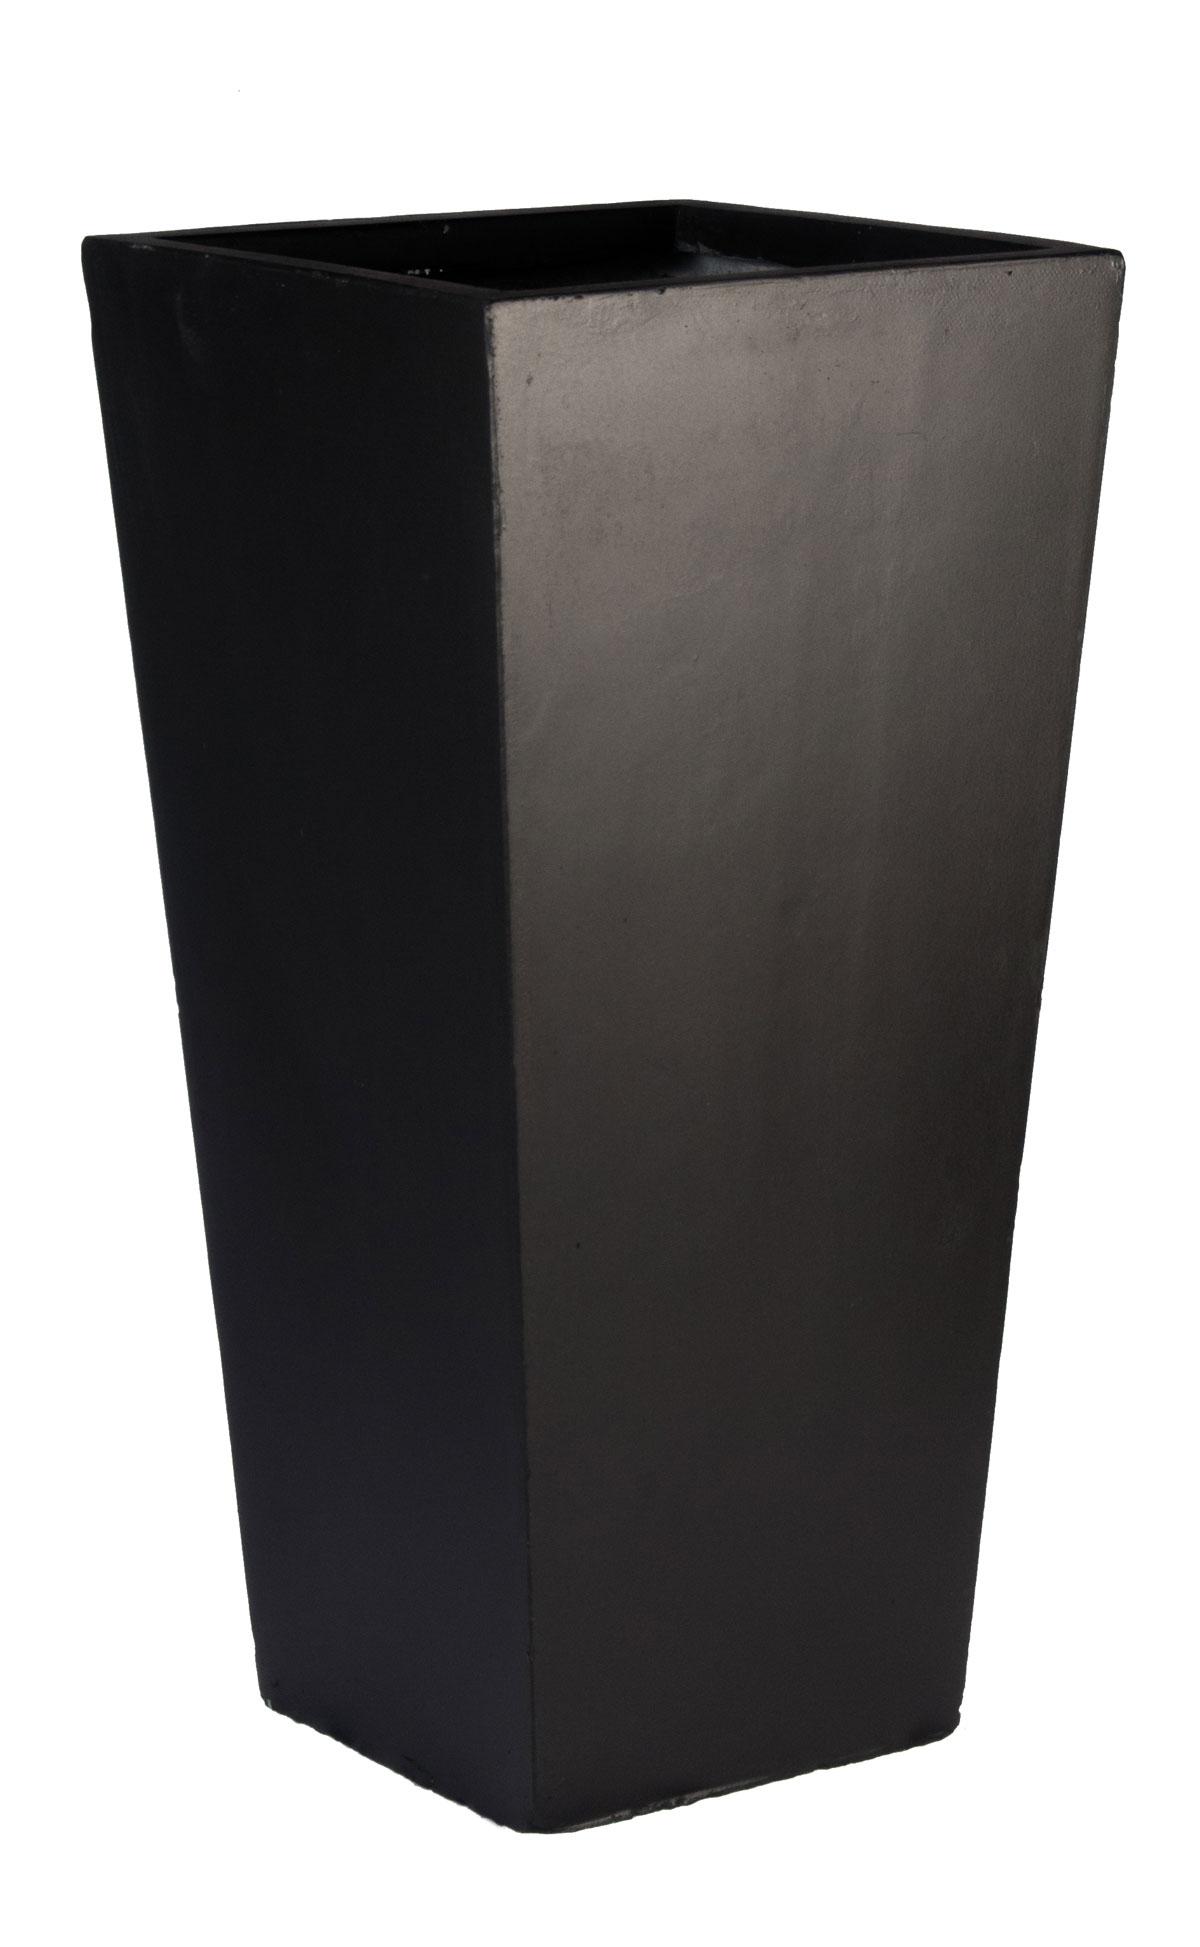 Tall Tapered Contemporary Black Light Concrete Planter by IDEALIST Lite H50.5 L24.5 W24.5 cm, 30L - citiplants.com